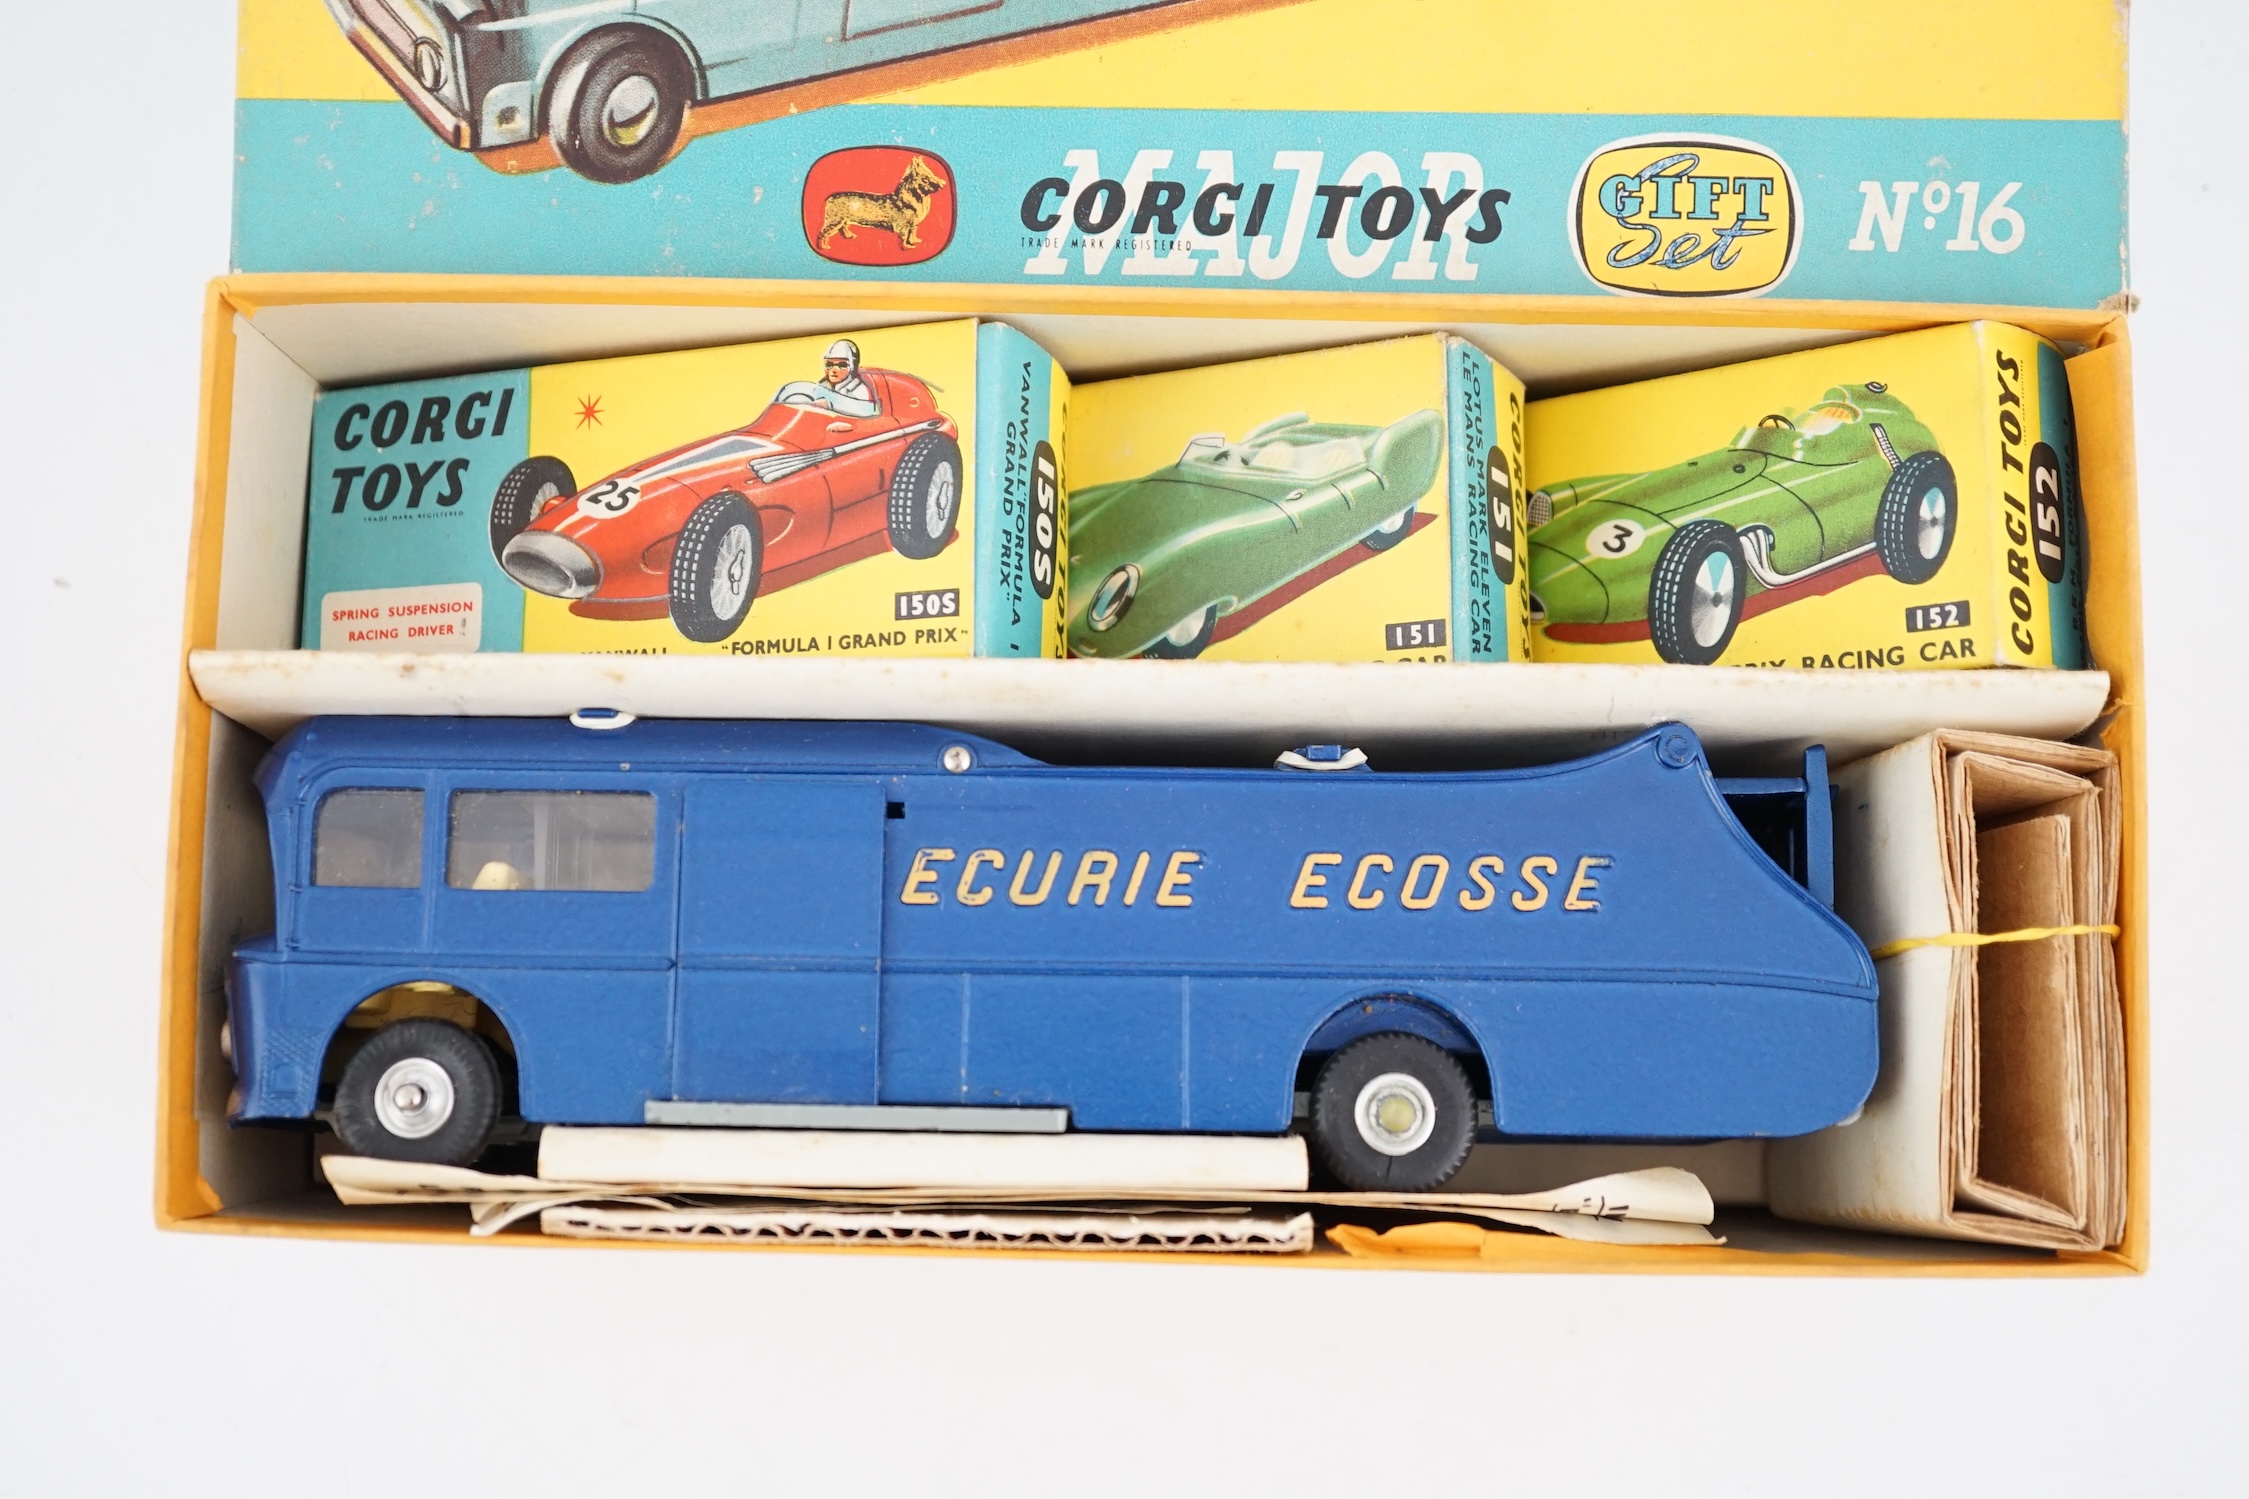 A boxed Corgi Major Toys Ecurie Ecosse Racing Car Transporter and three racing cars, Gift Set No.16